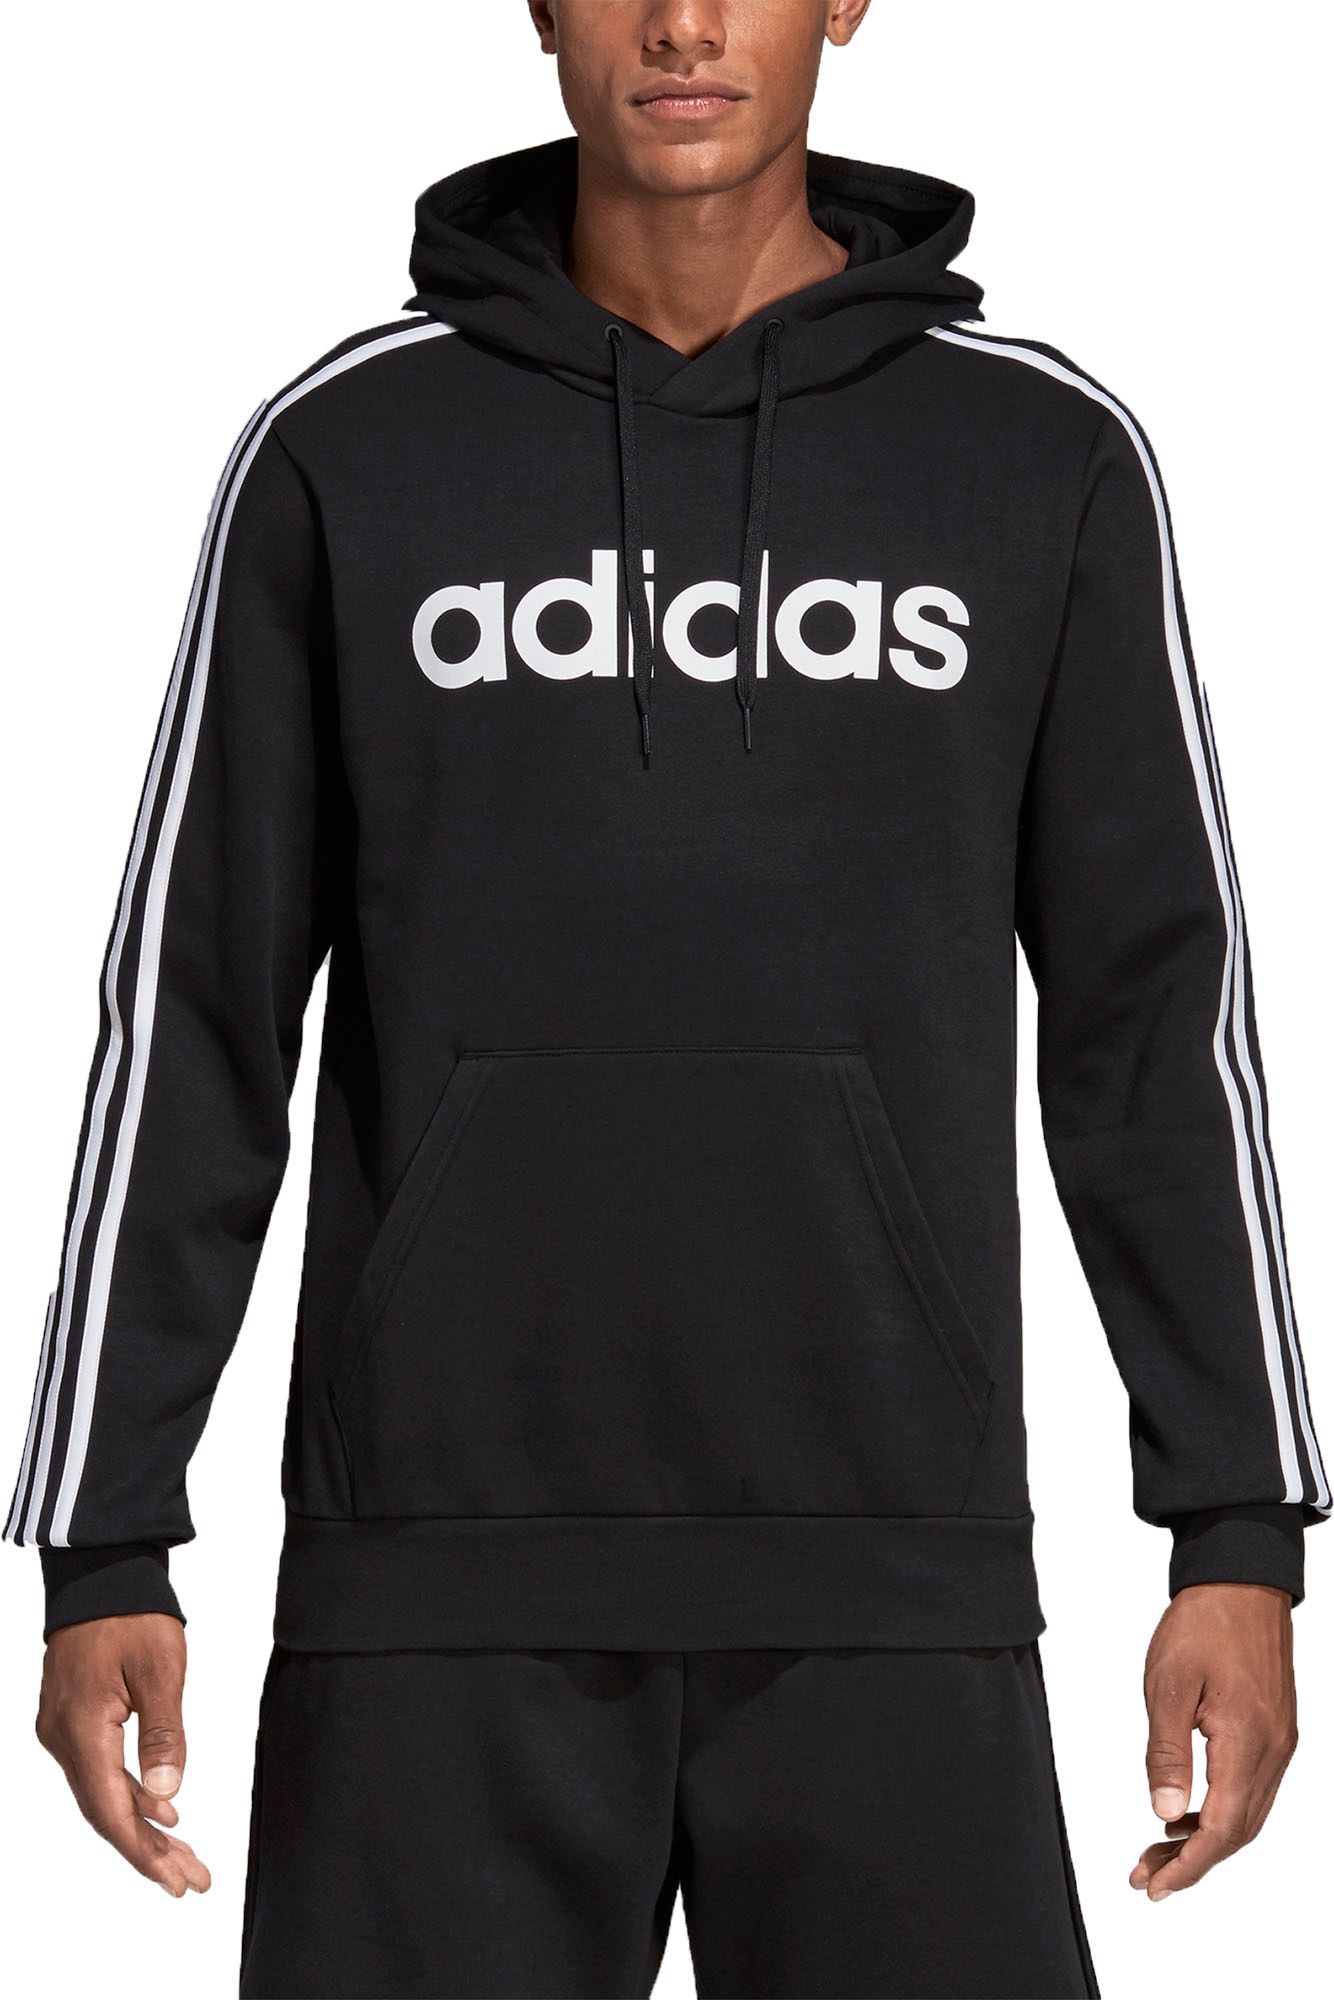 adidas black striped hoodie